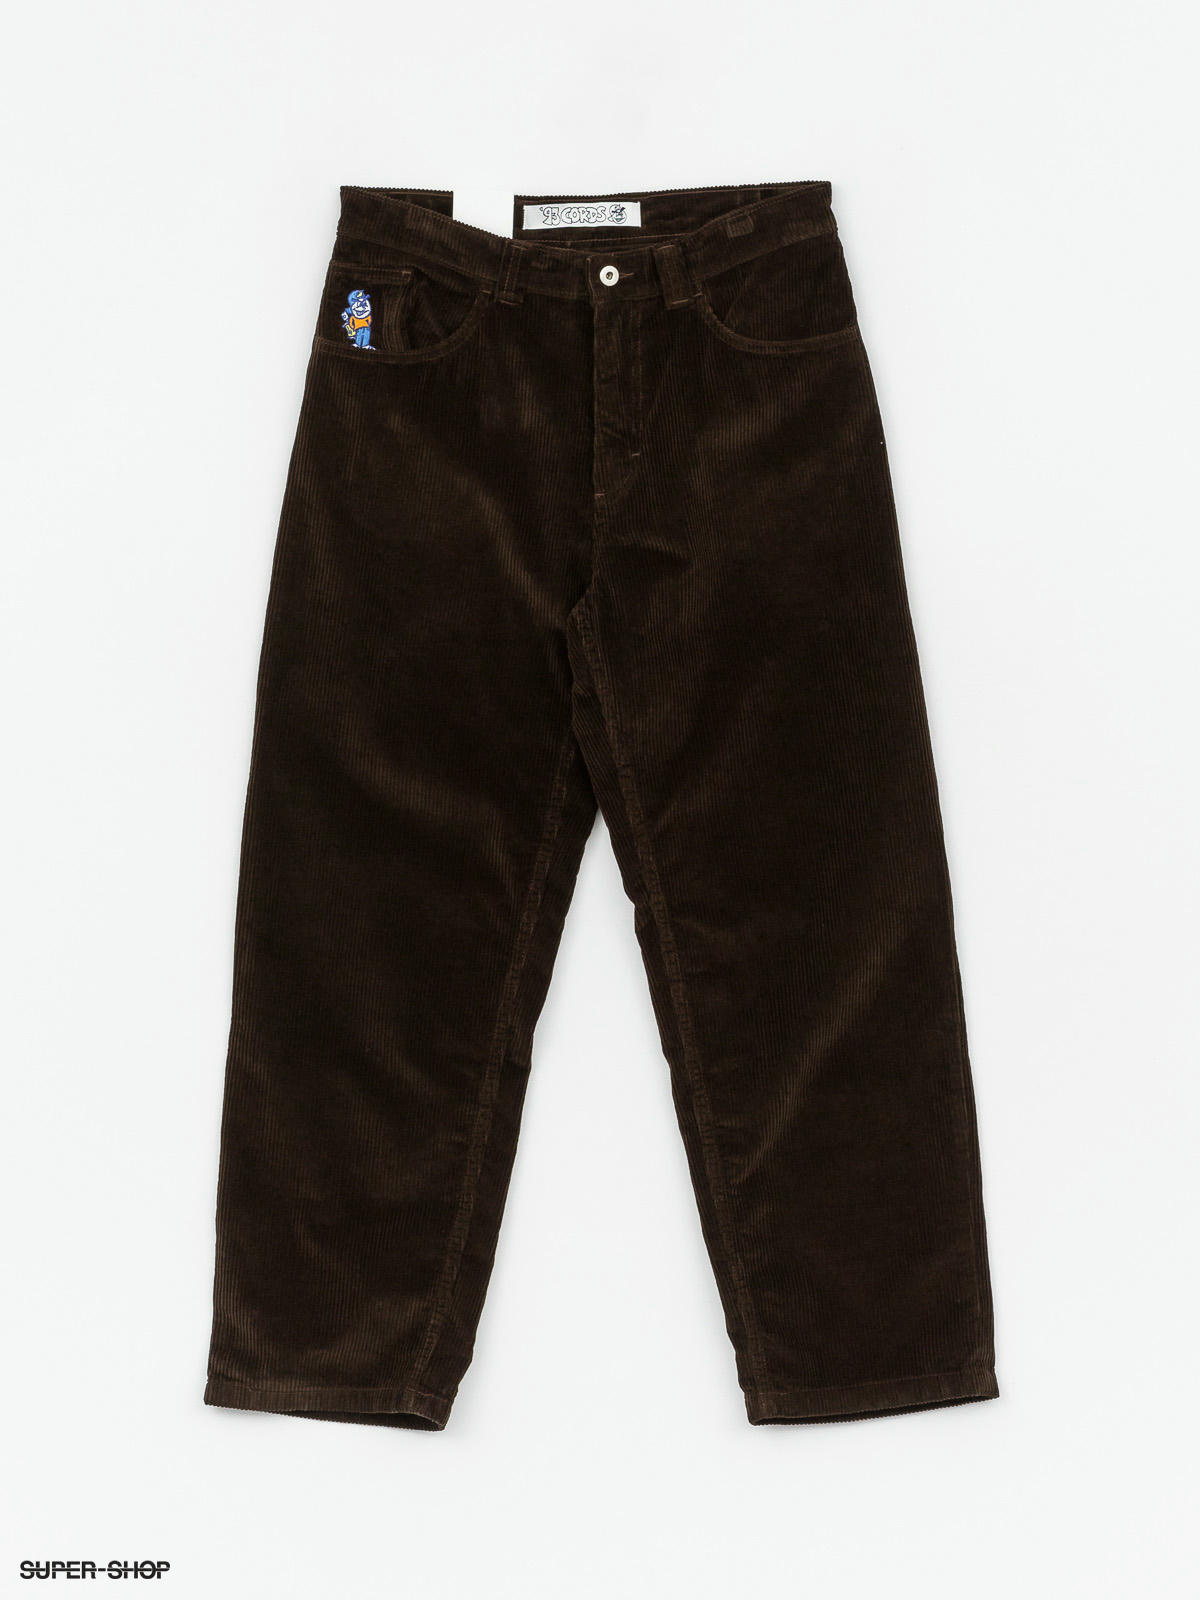 Polar Skate 93 Cords Pants (brown)